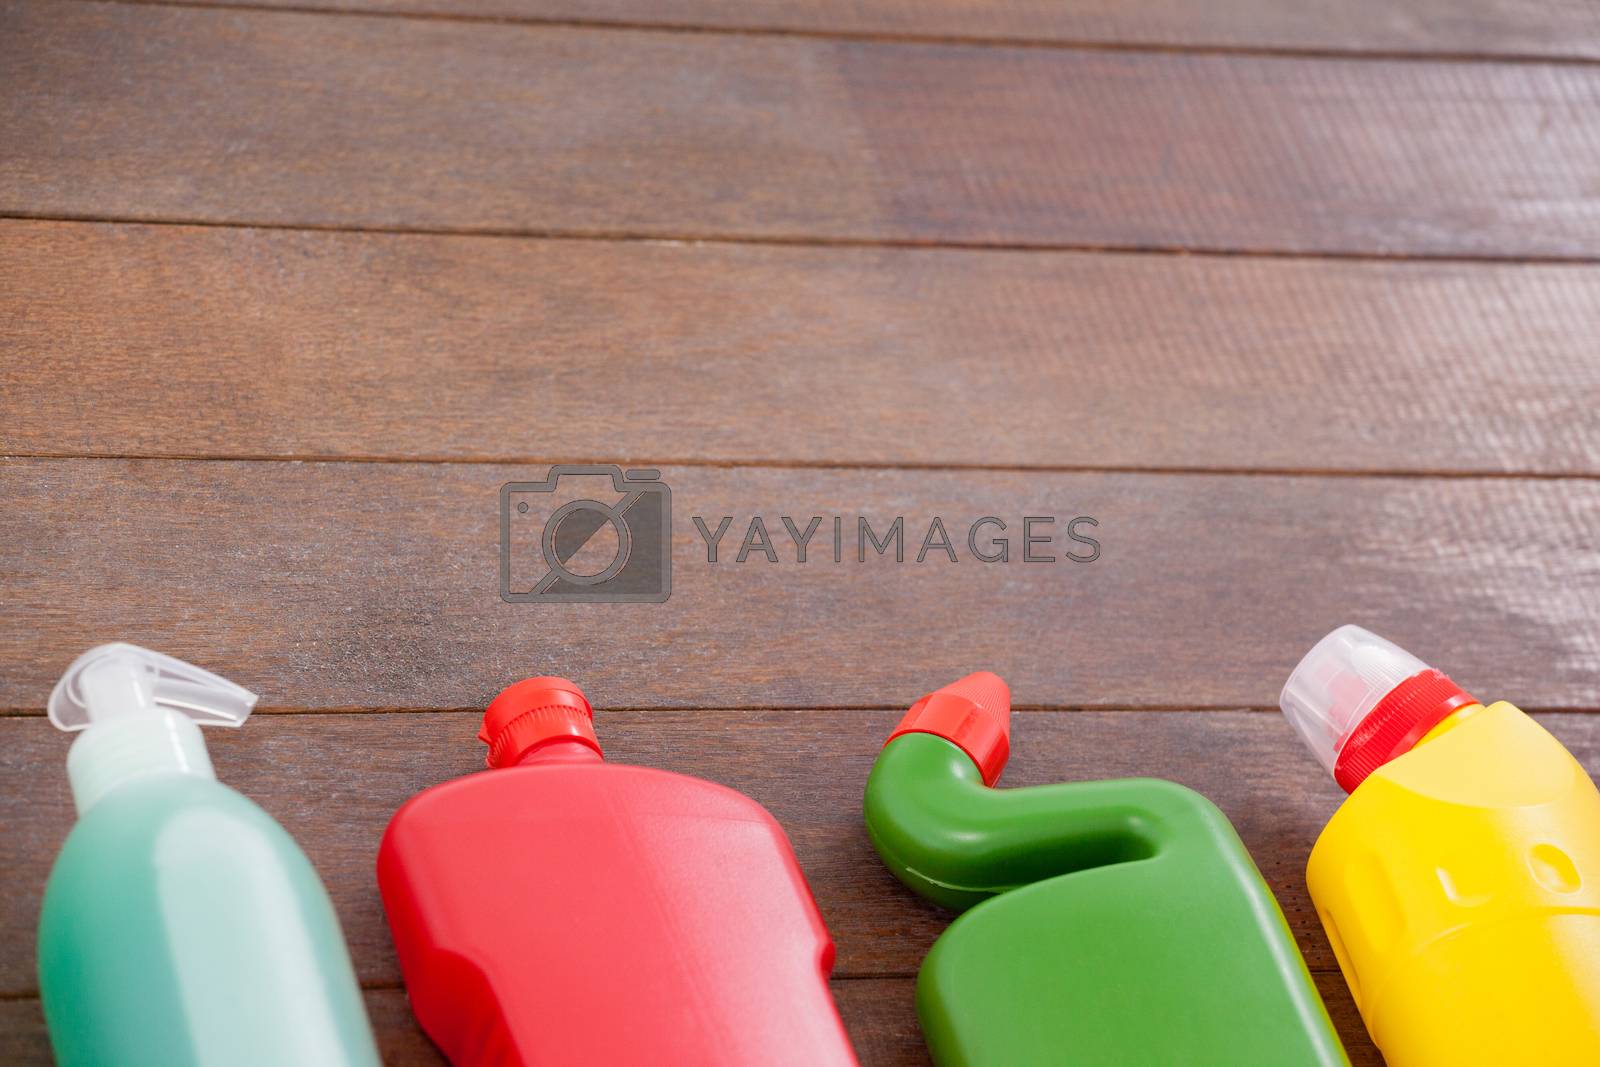 Royalty free image of Detergent bottles arranged on a wooden floor by Wavebreakmedia